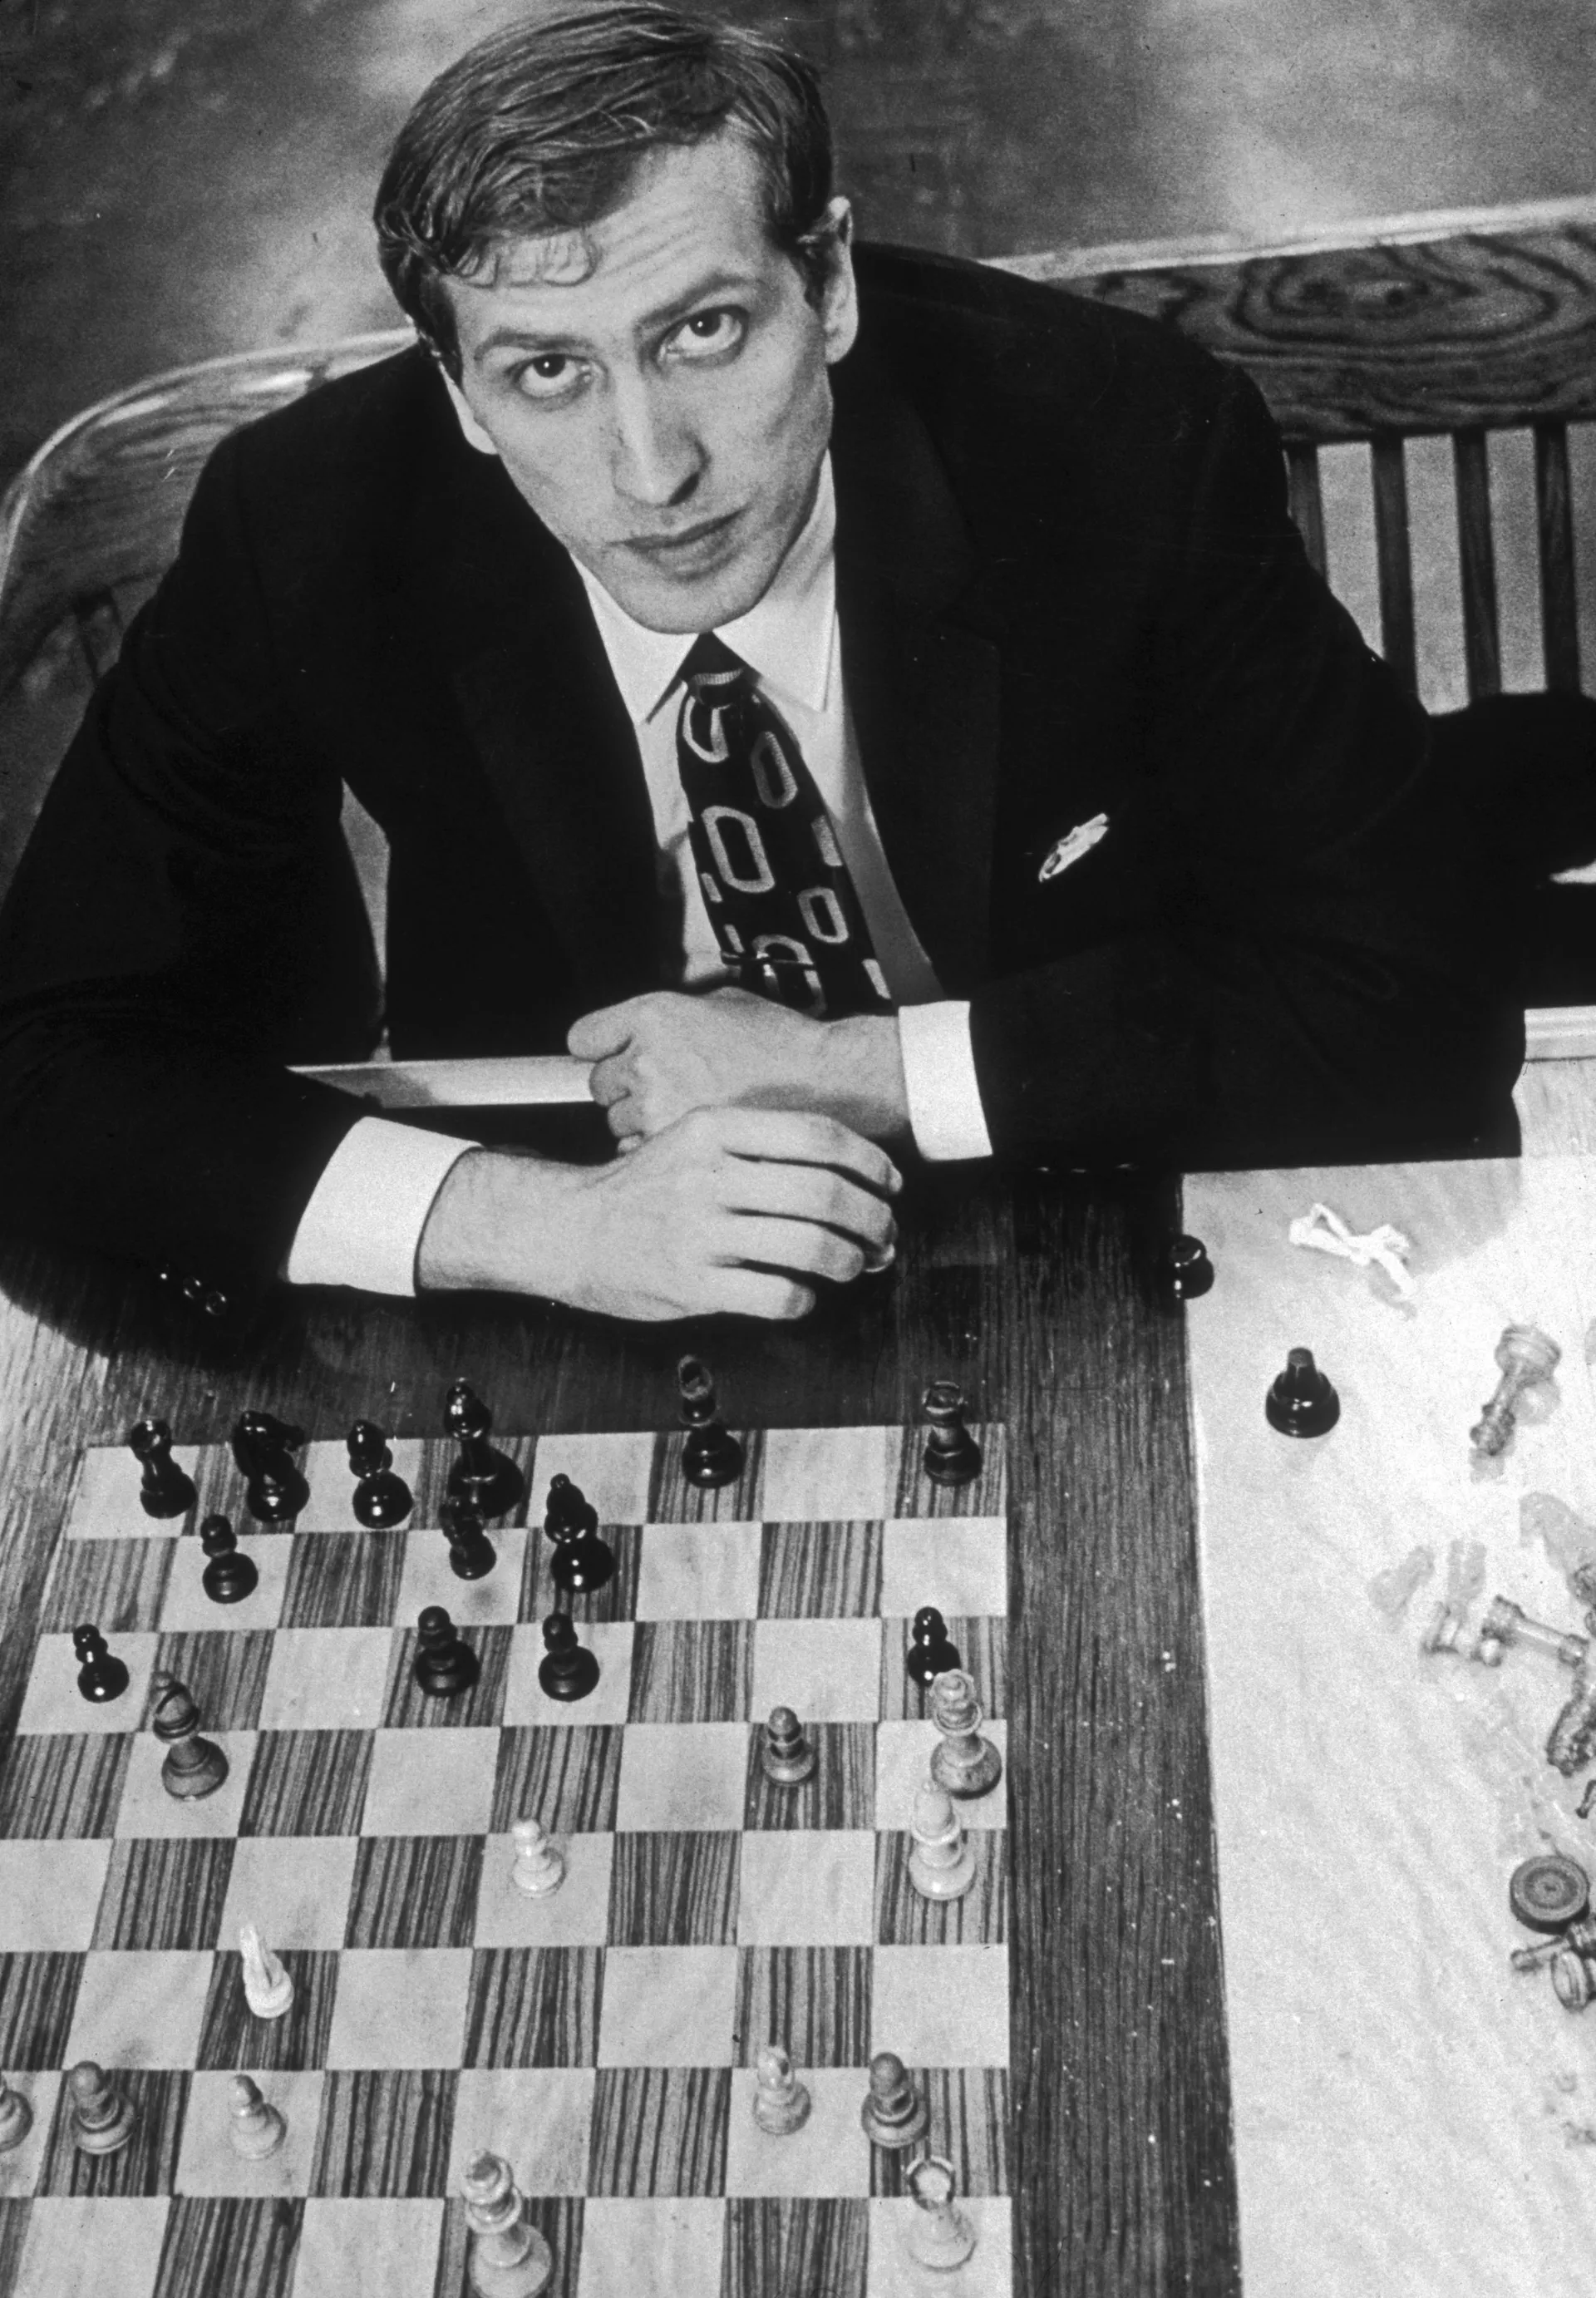 Bobby Fischer Against the World'' - 1 euro Lycée Leclerc